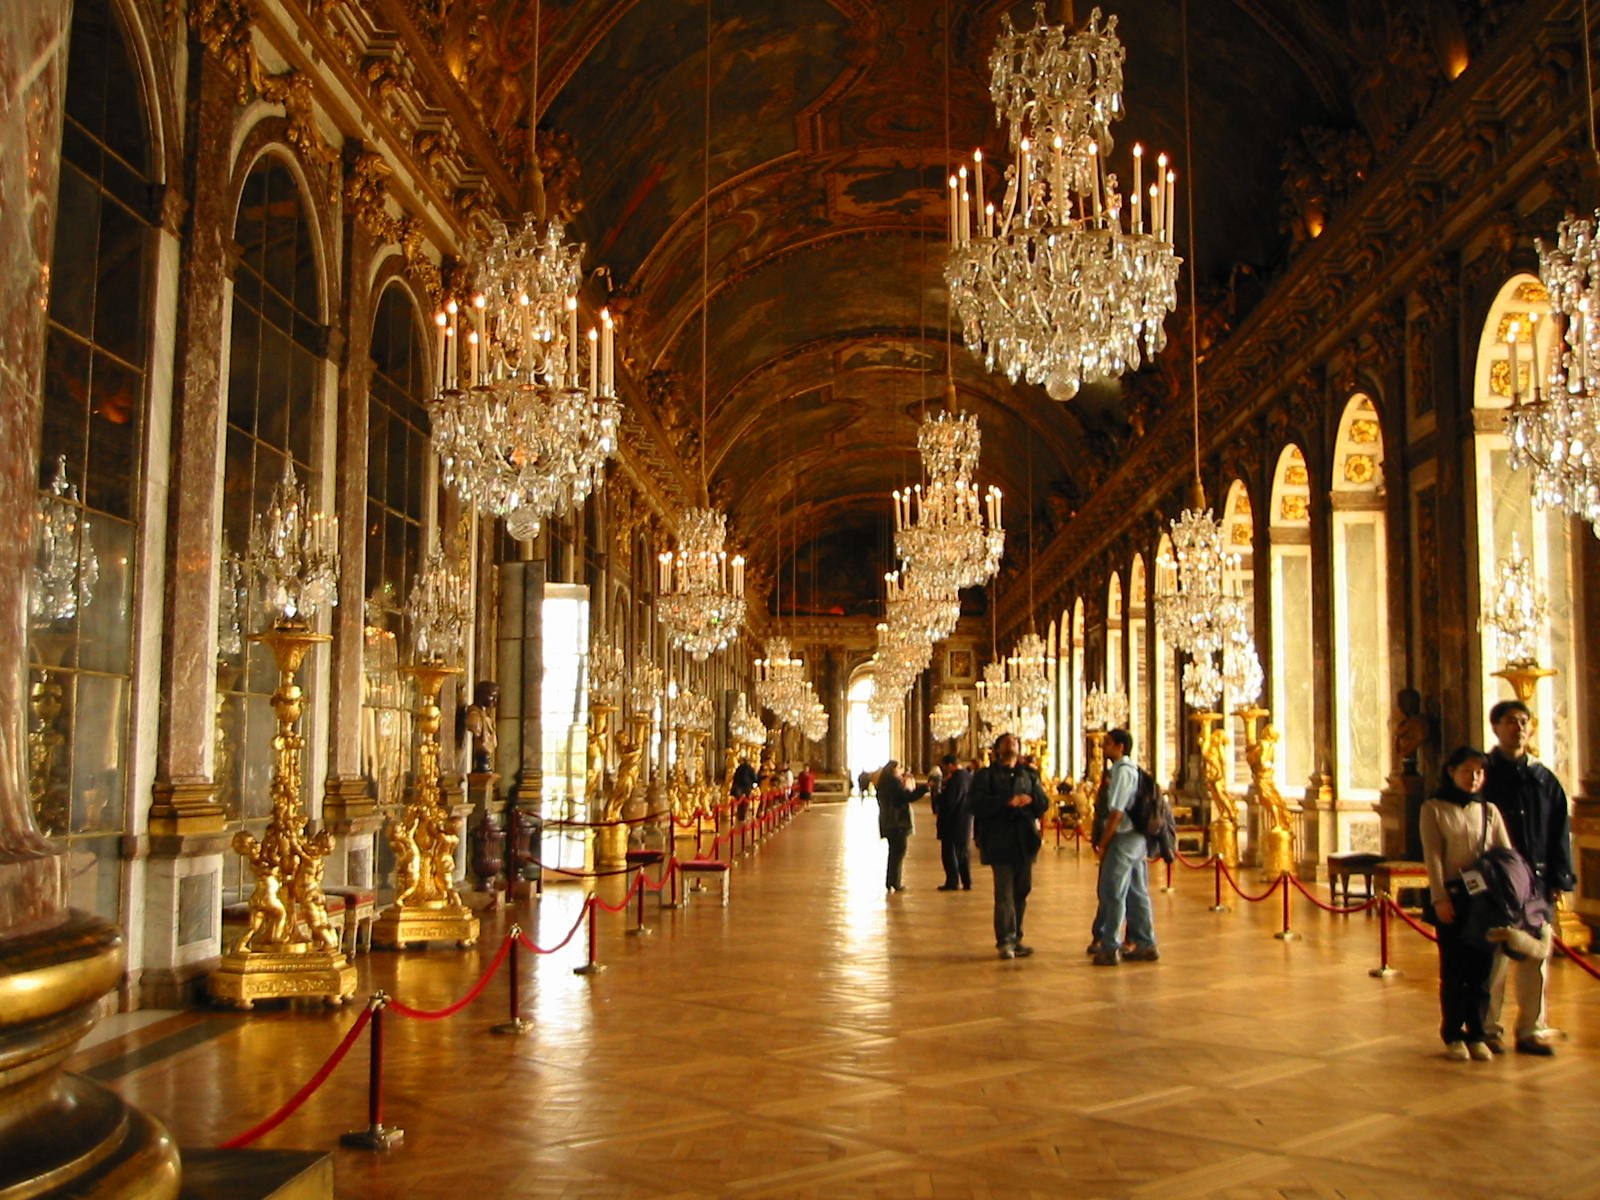 Chateau de versailles. Версальский дворец Франция зеркальная галерея. Музей Версаль Франция. Замок Версаль (Chateau de Versailles).